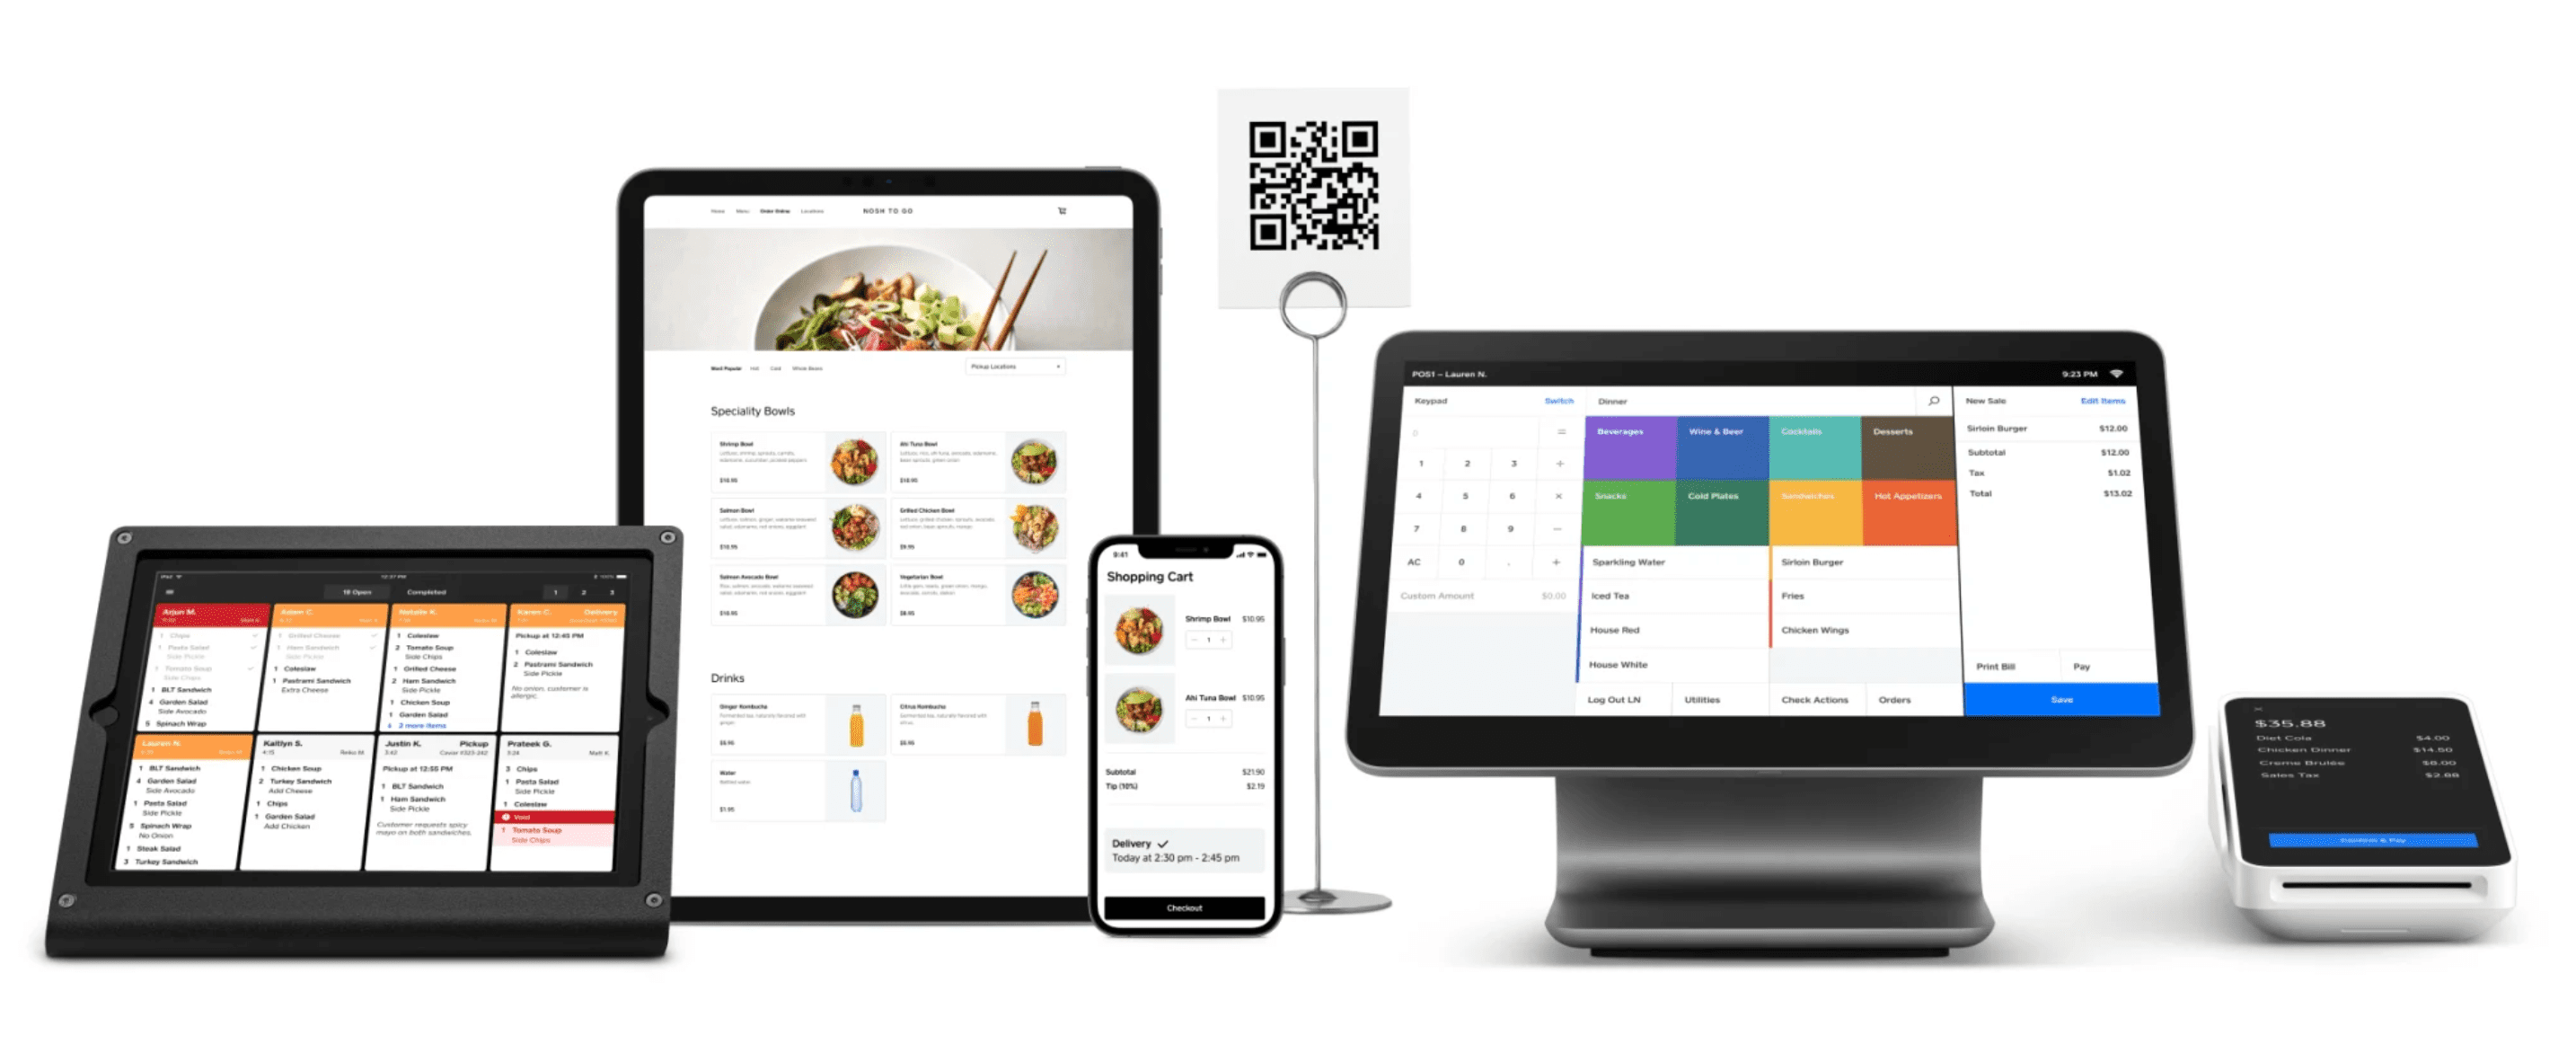 Square For Restaurants kitchen display screen, online ordering platform, mobile ordering app, Square Register, and Square Terminal